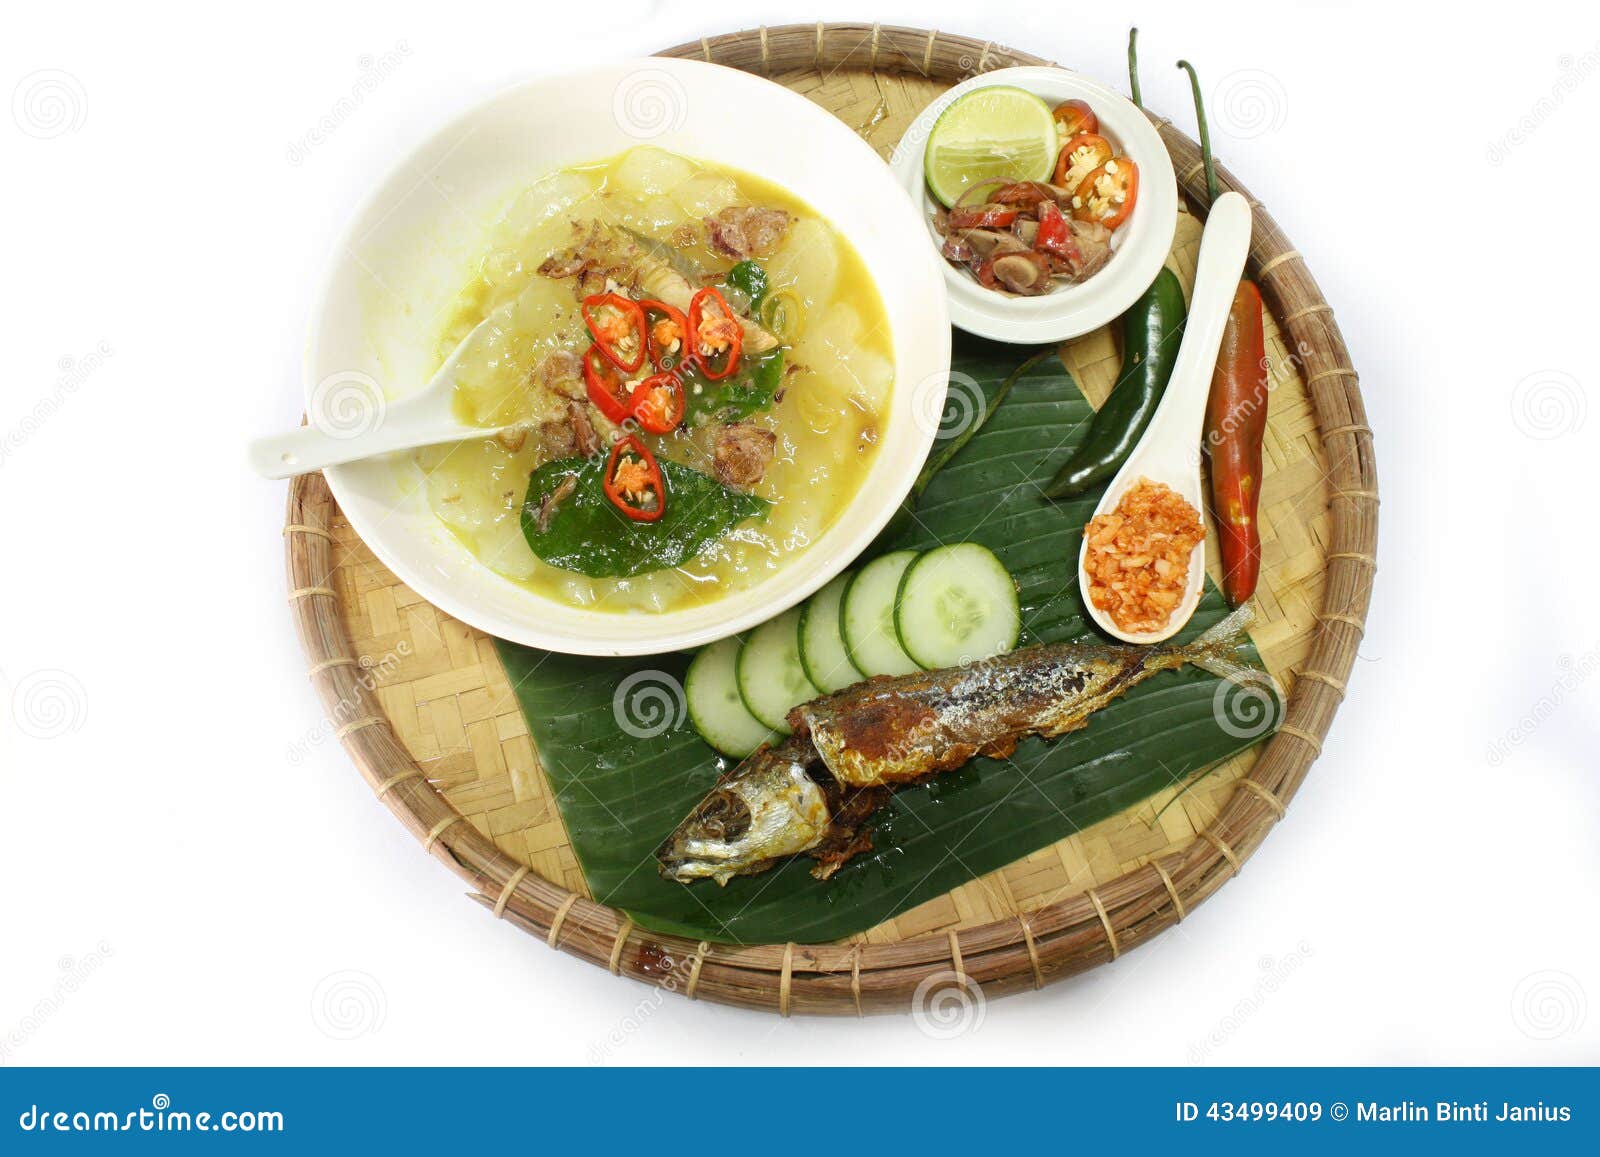 Traditional Delicacies Of Kadazandusun Stock Image - Image of delicious